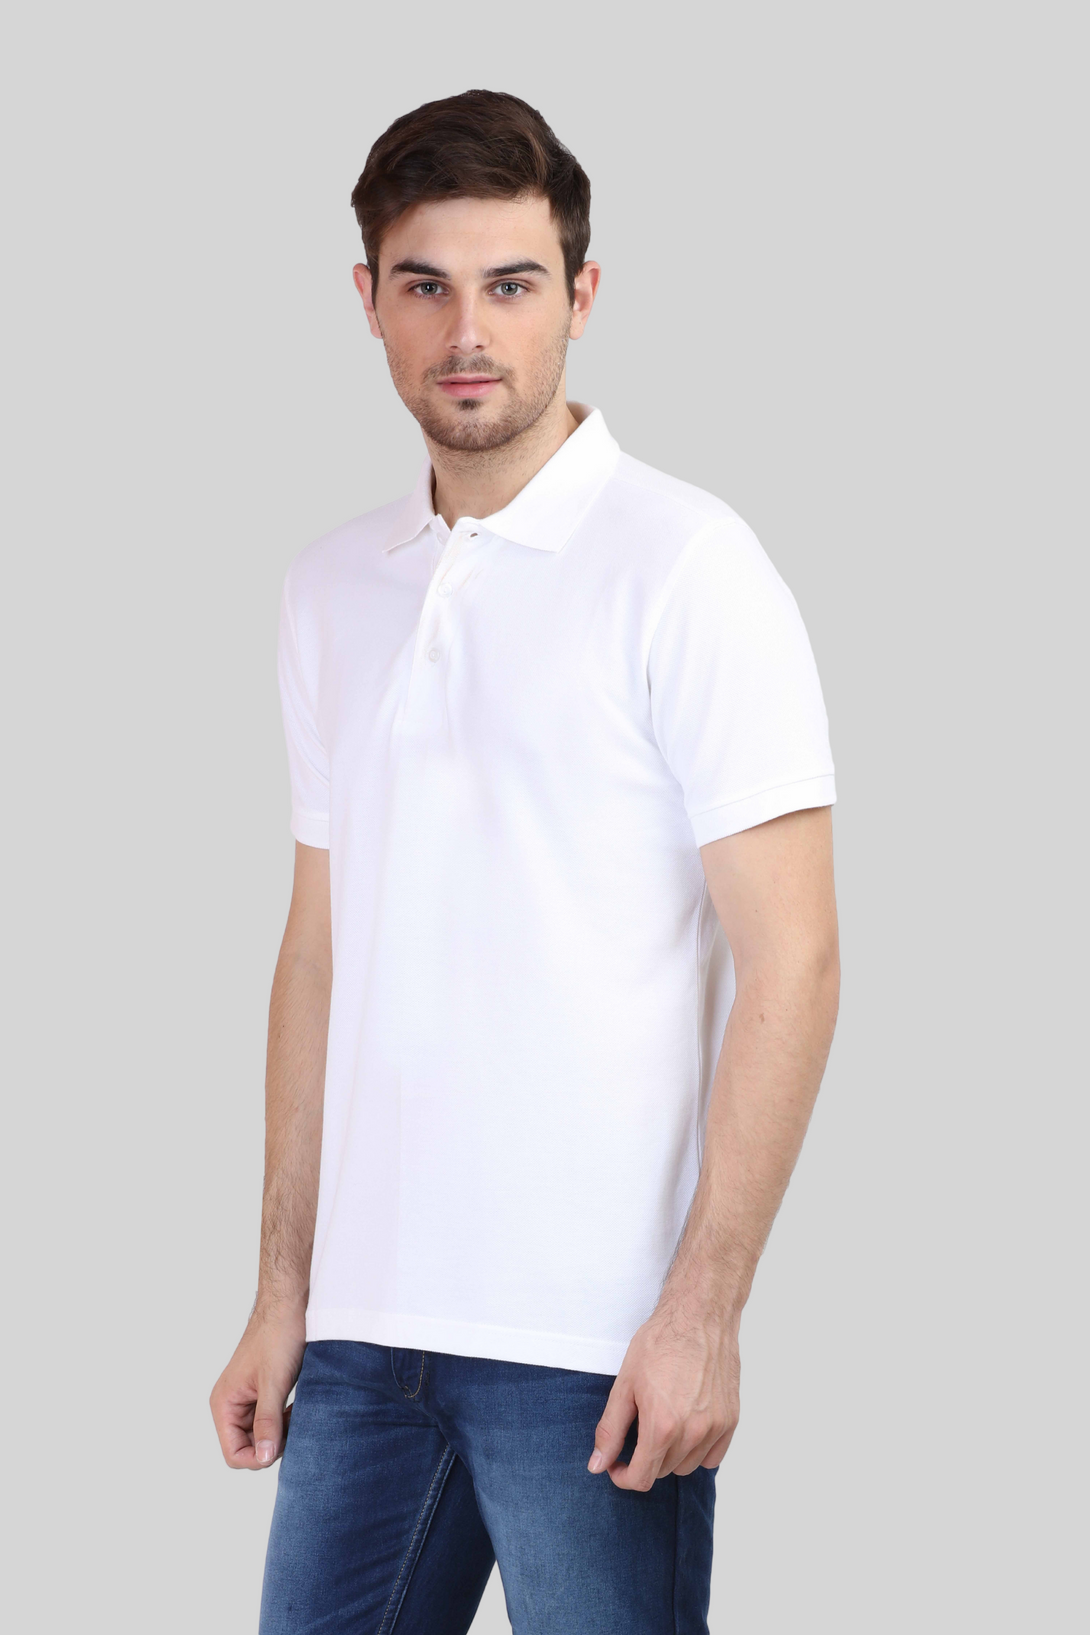 White Polo T-Shirt For Men - WowWaves